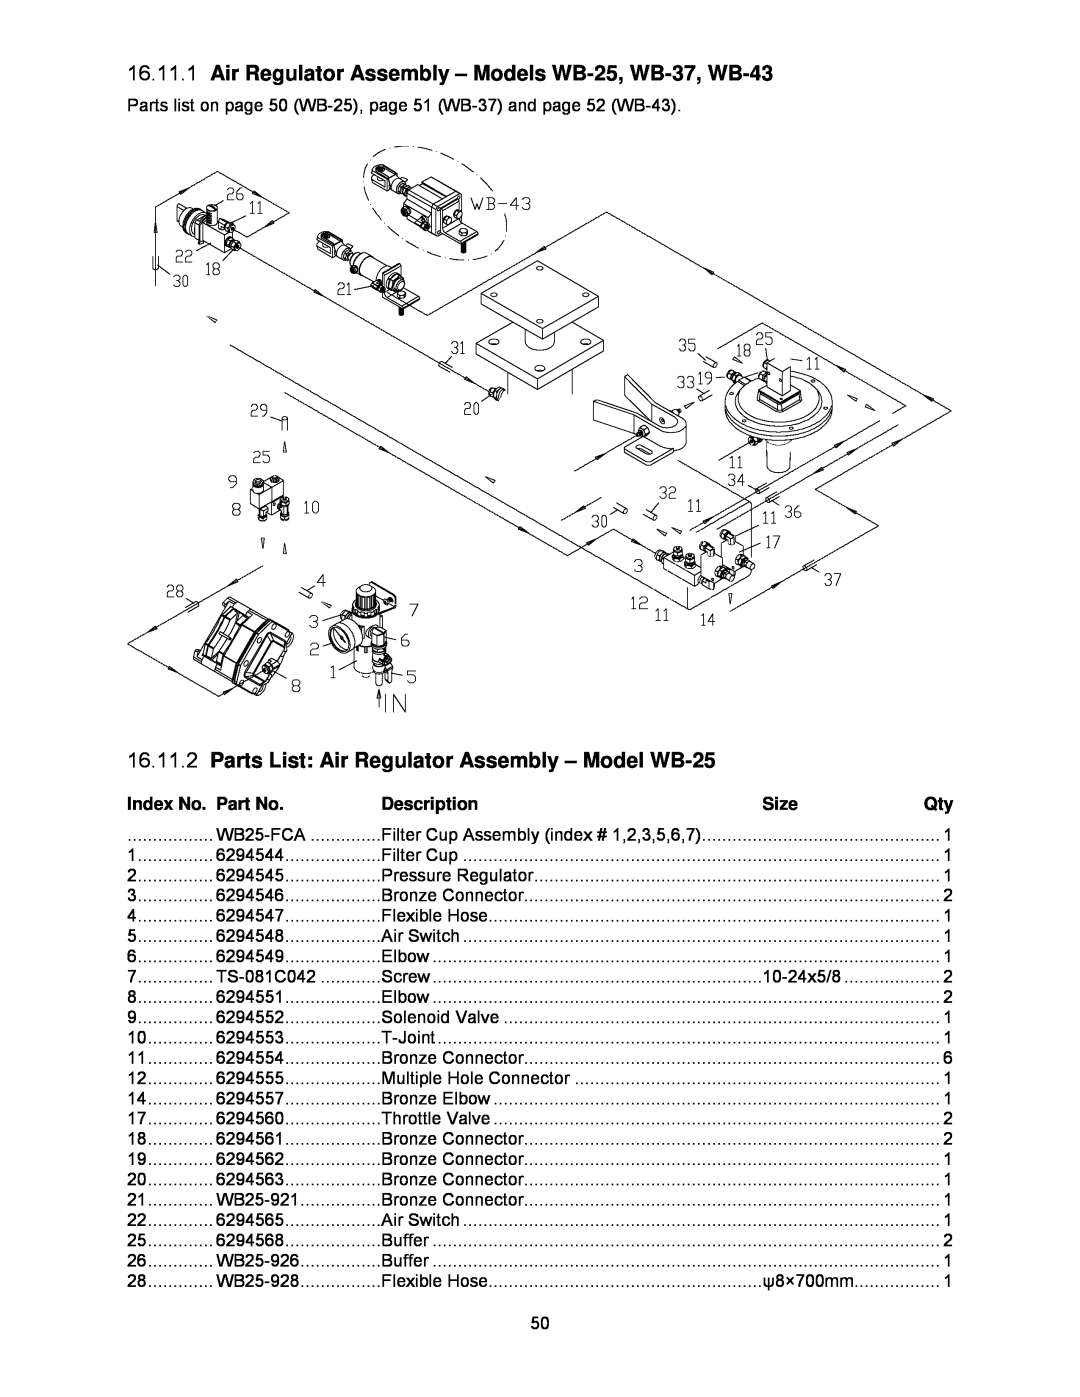 Powermatic Air Regulator Assembly - Models WB-25, WB-37, WB-43, Parts List Air Regulator Assembly - Model WB-25, Size 